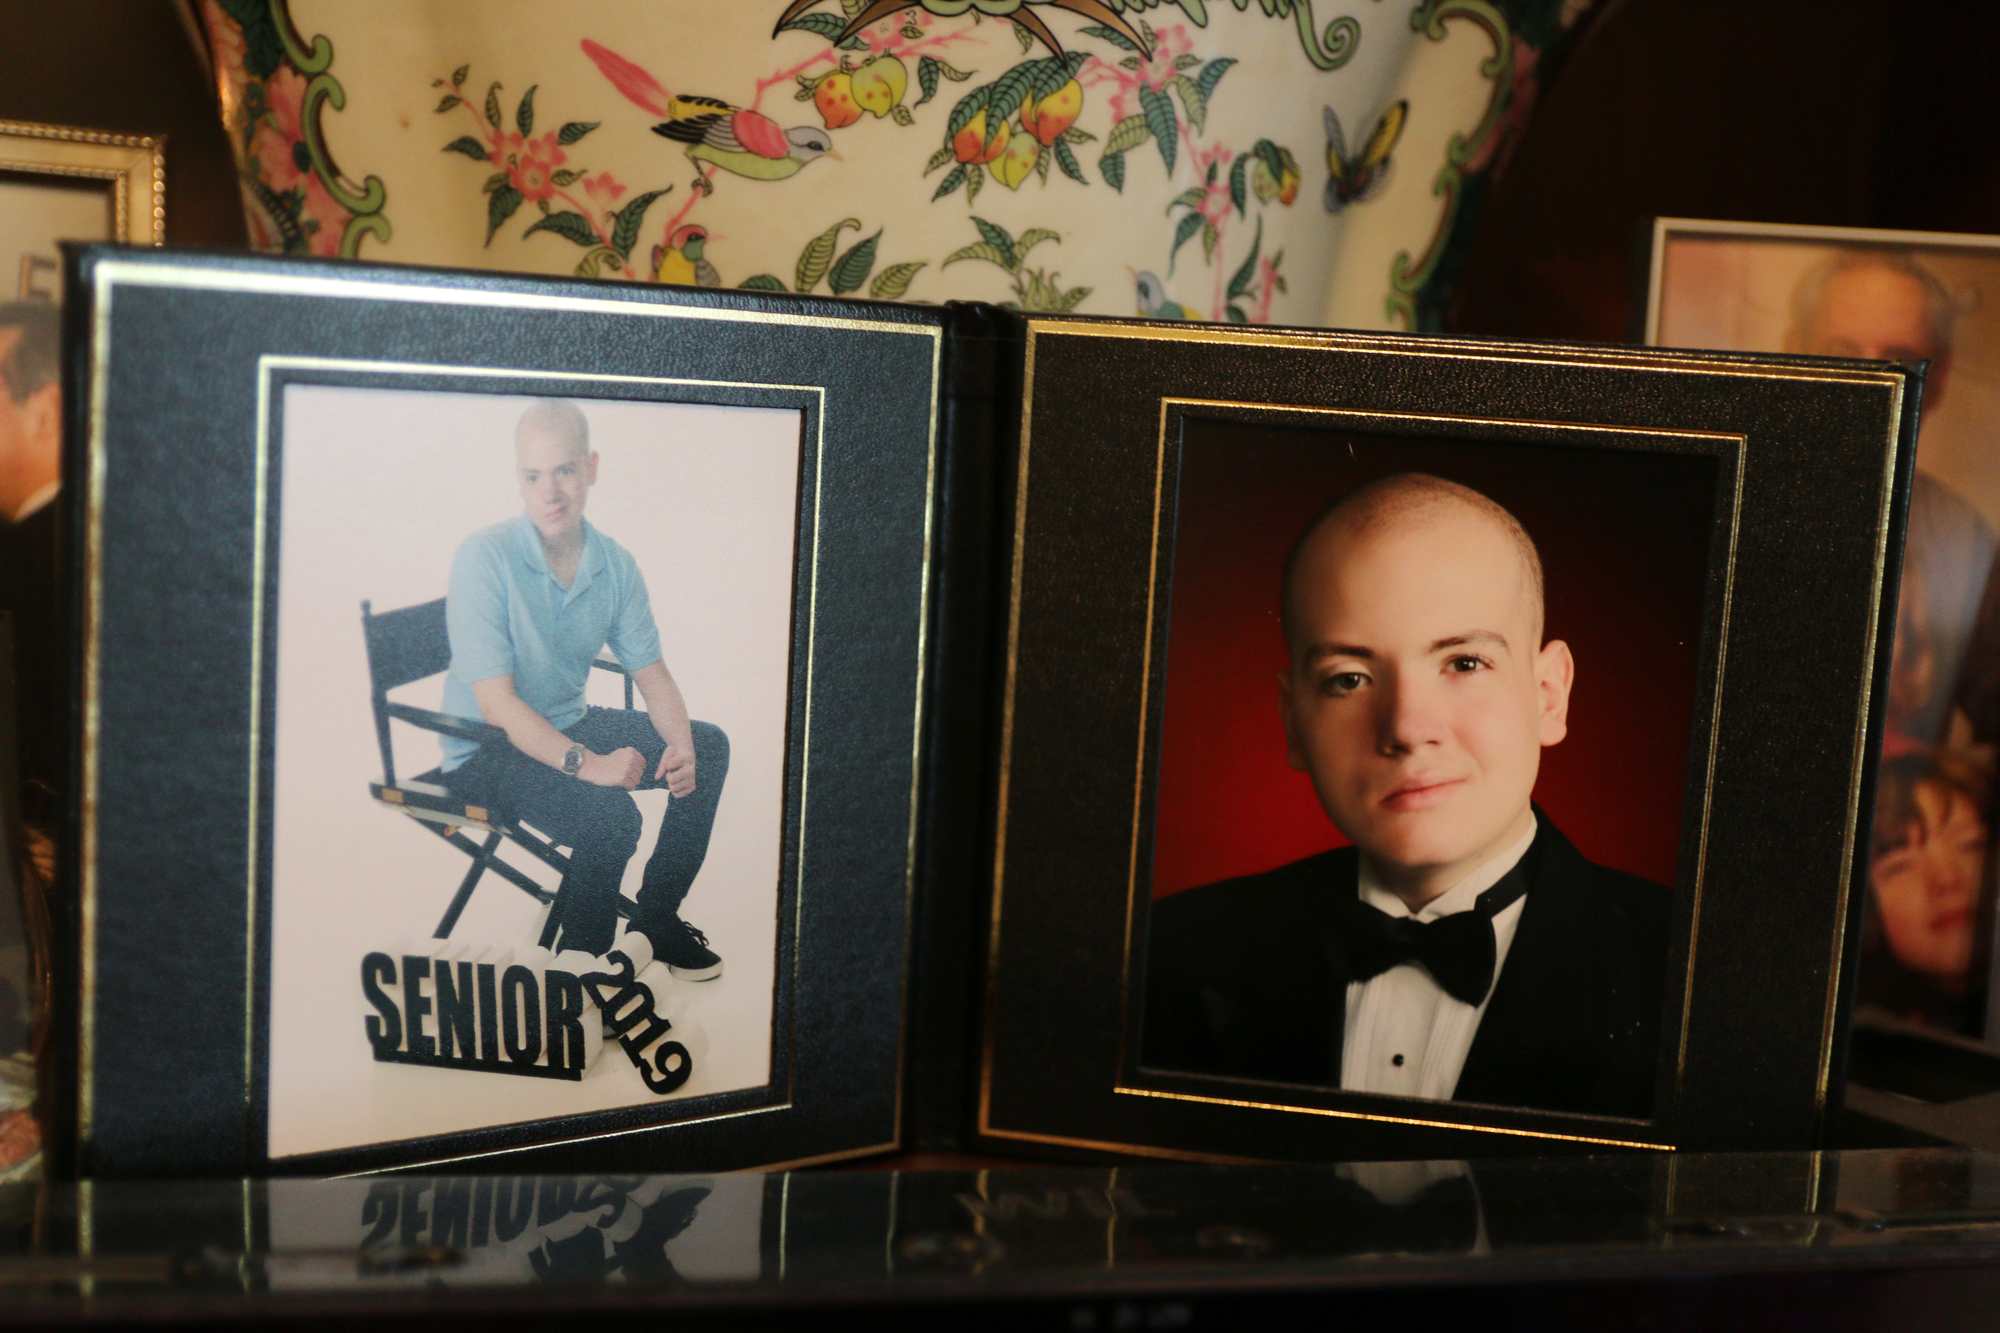 Michael Blavis' senior photos are displayed in his home's living room. Photo by Jarleene Almenas